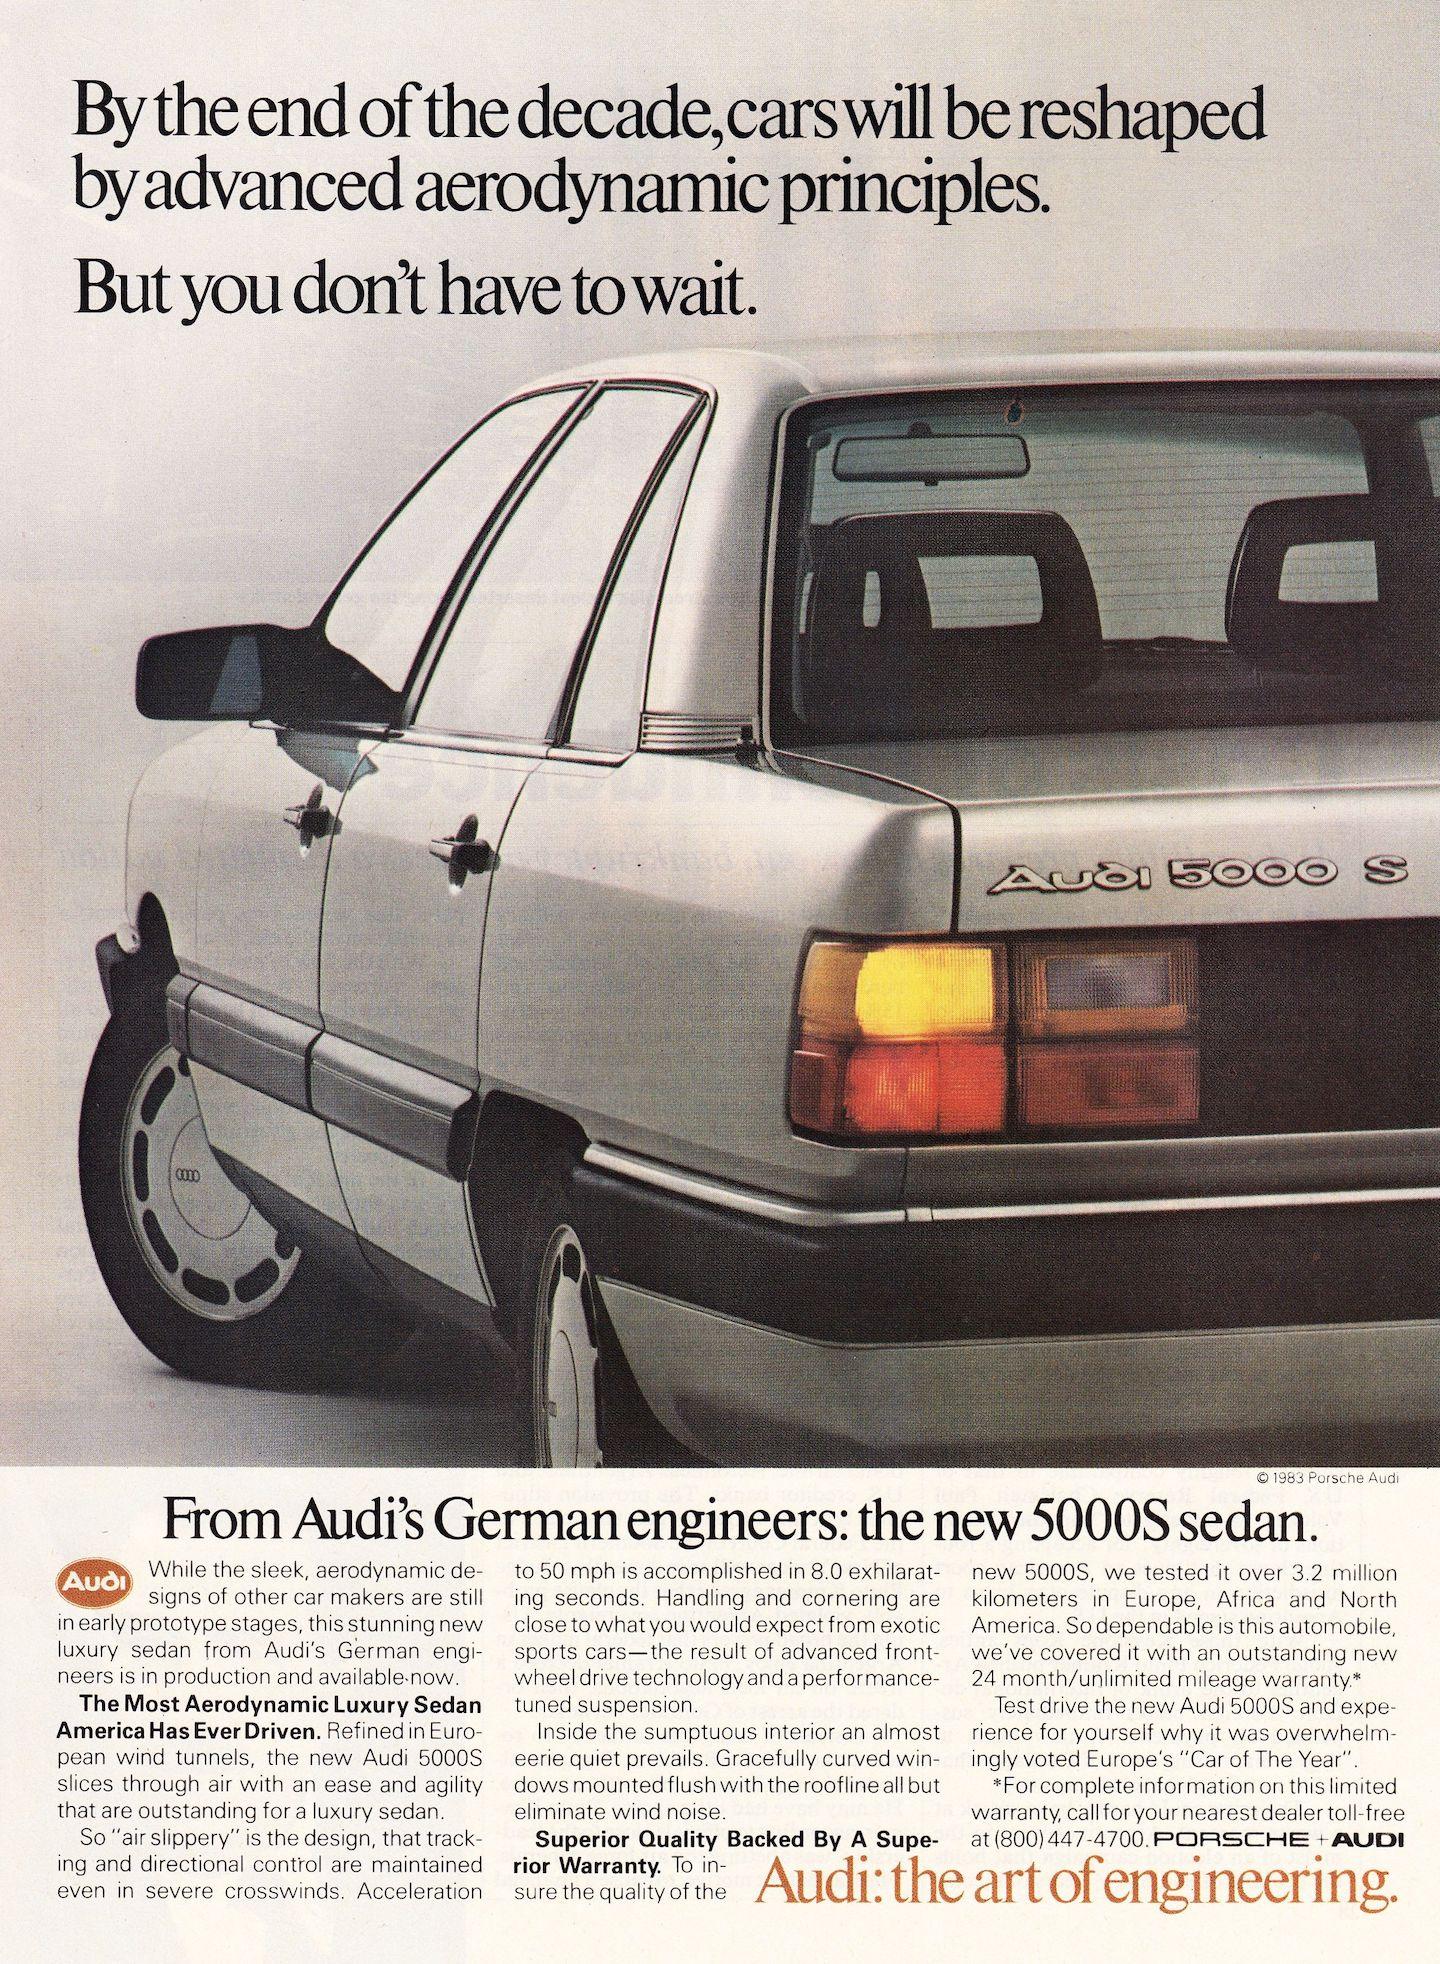 Audi C3 5000 Print Ad